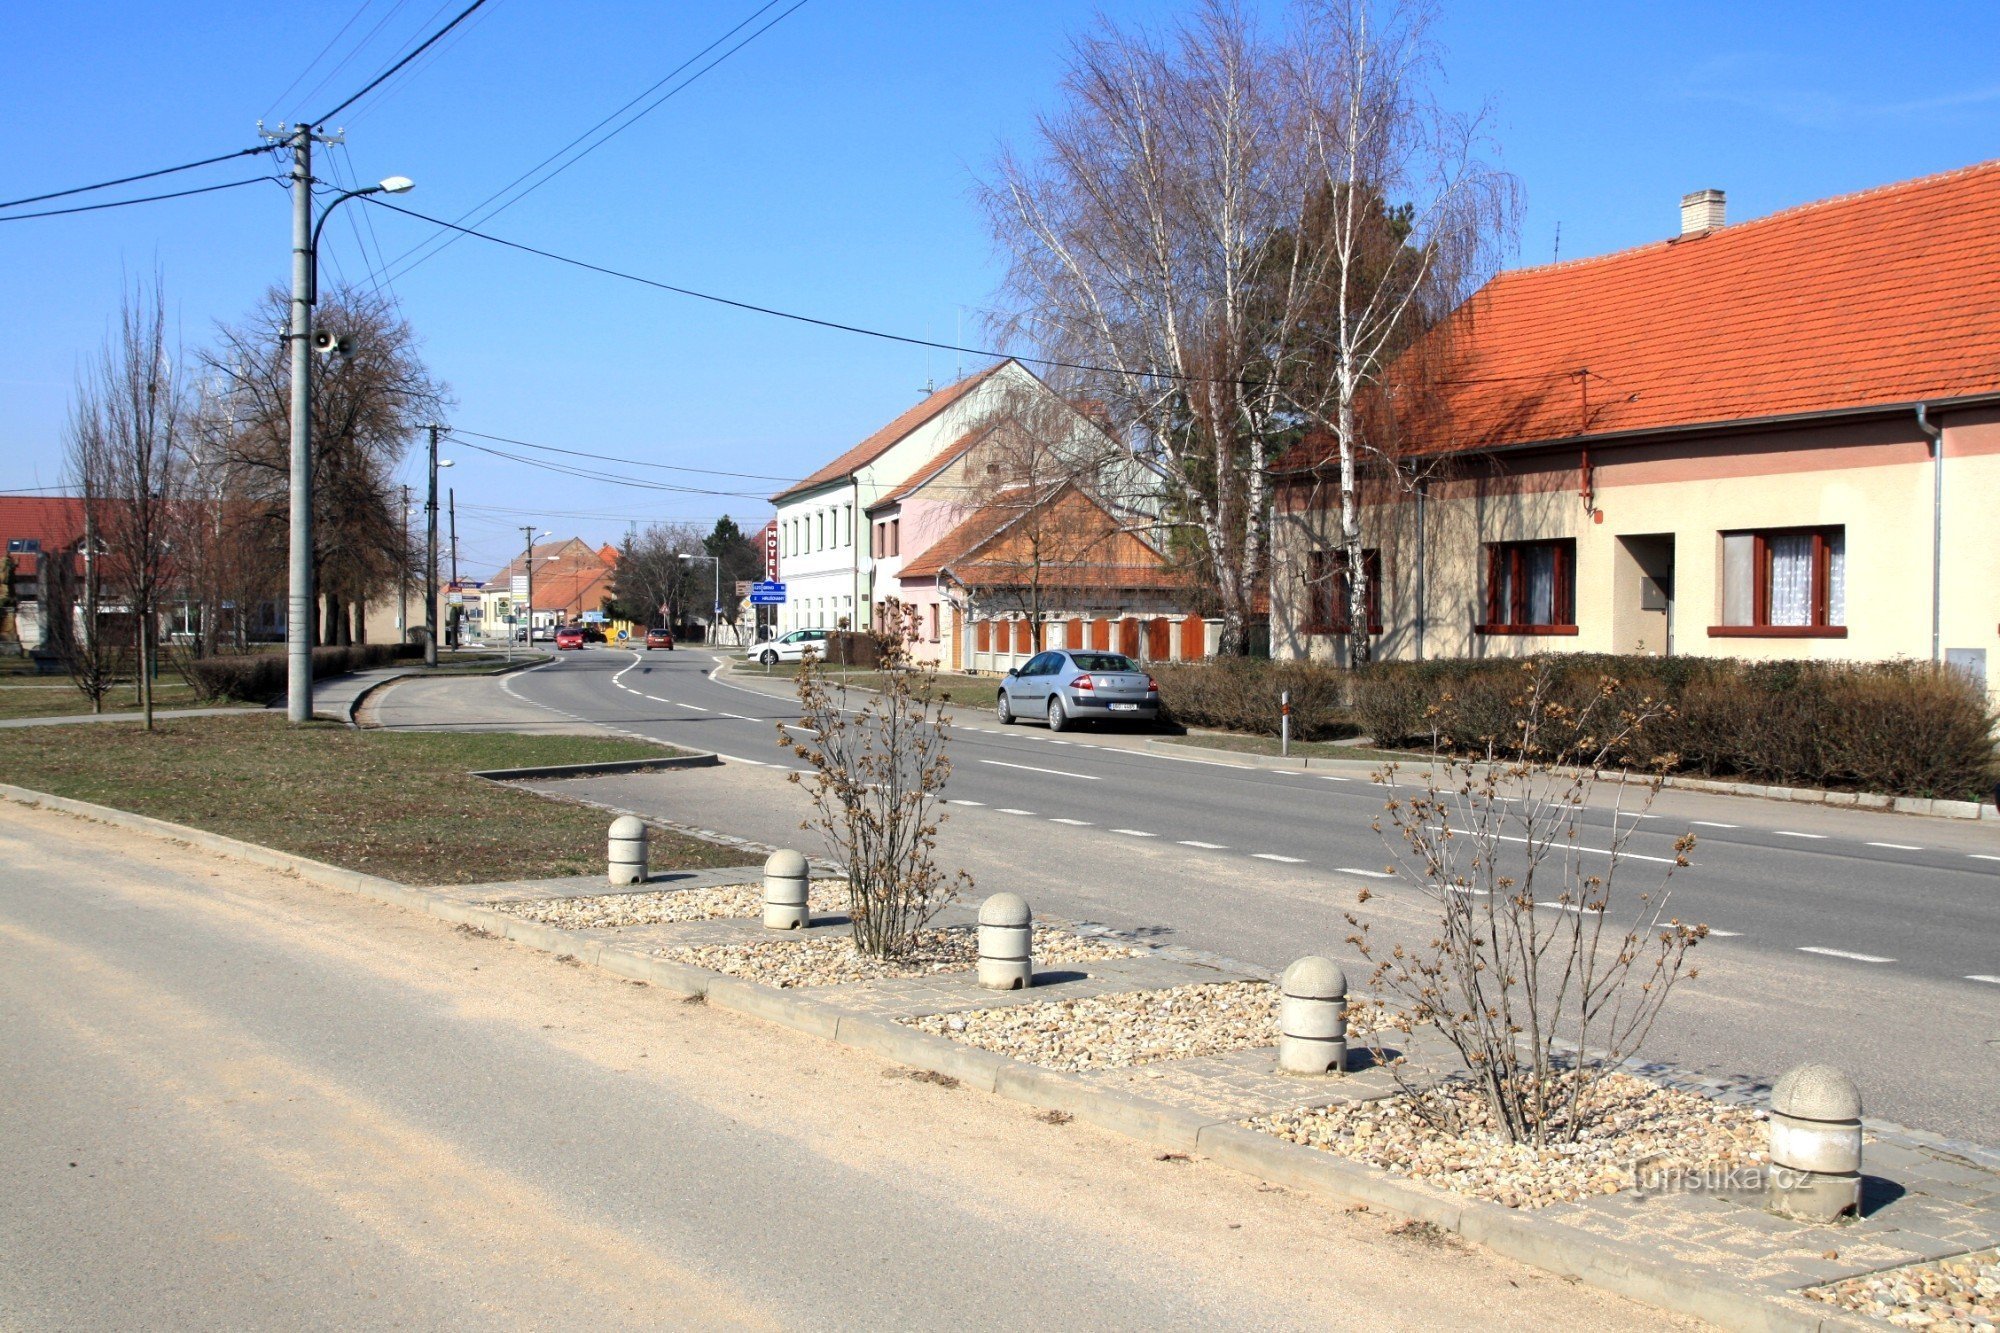 La calle principal de Vojkovice